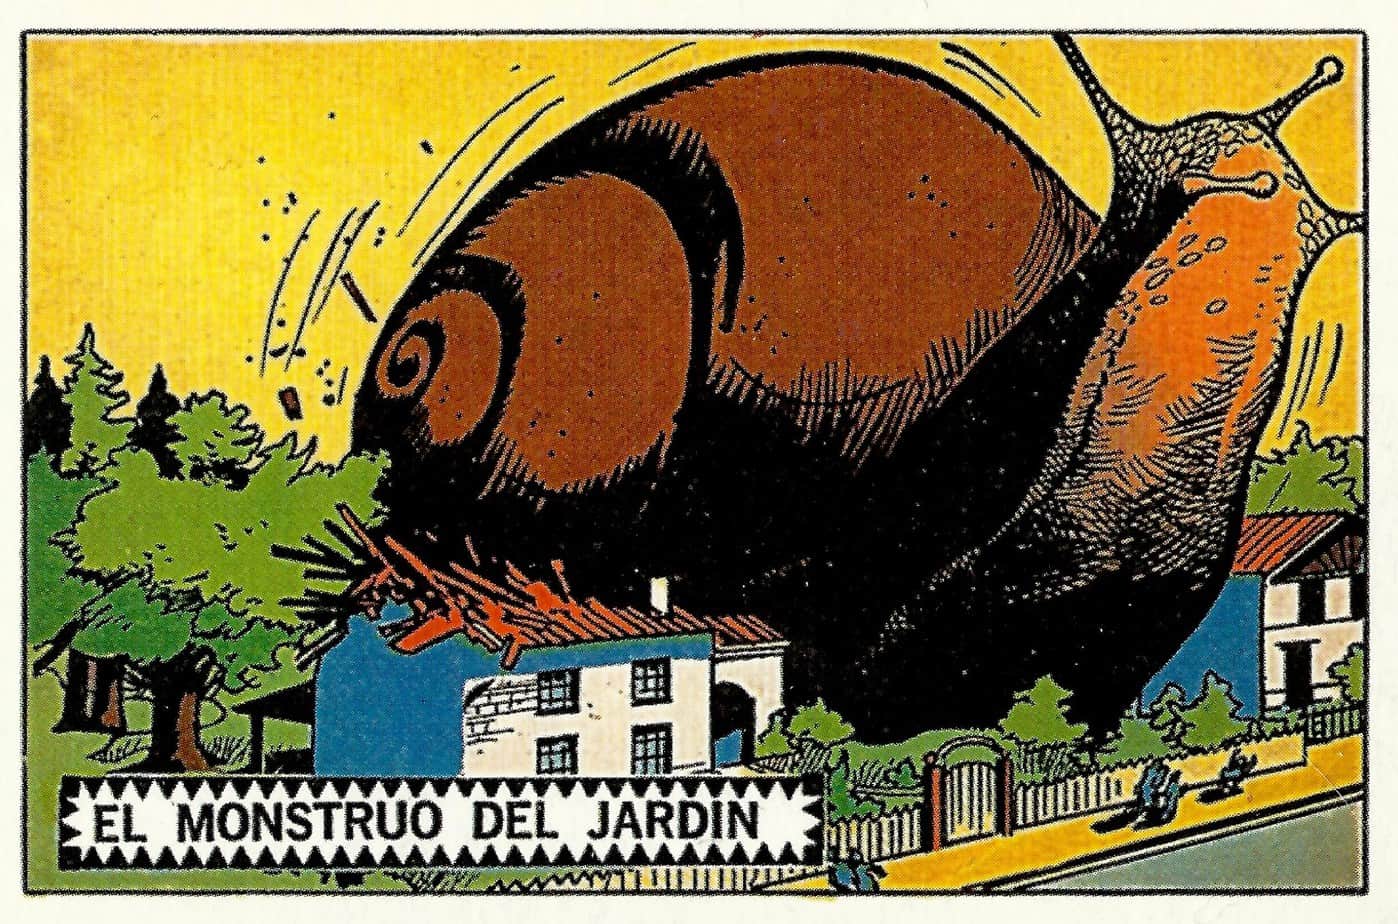 PLATOS VOLADORES AL ATAQUE! (1971) Alberto Breccia giant snail